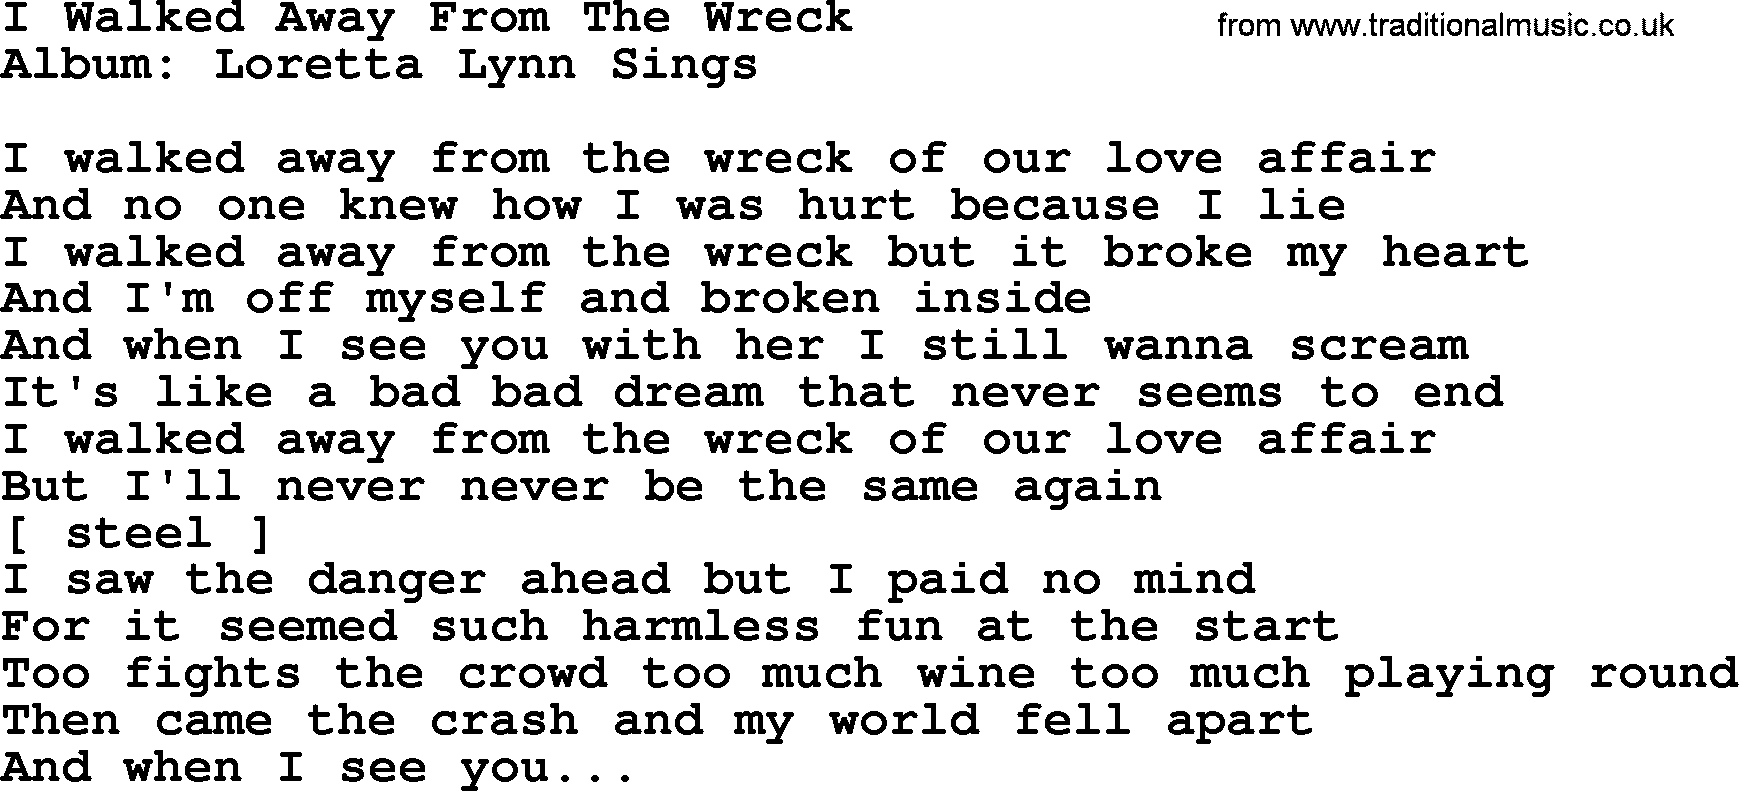 Loretta Lynn song: I Walked Away From The Wreck lyrics